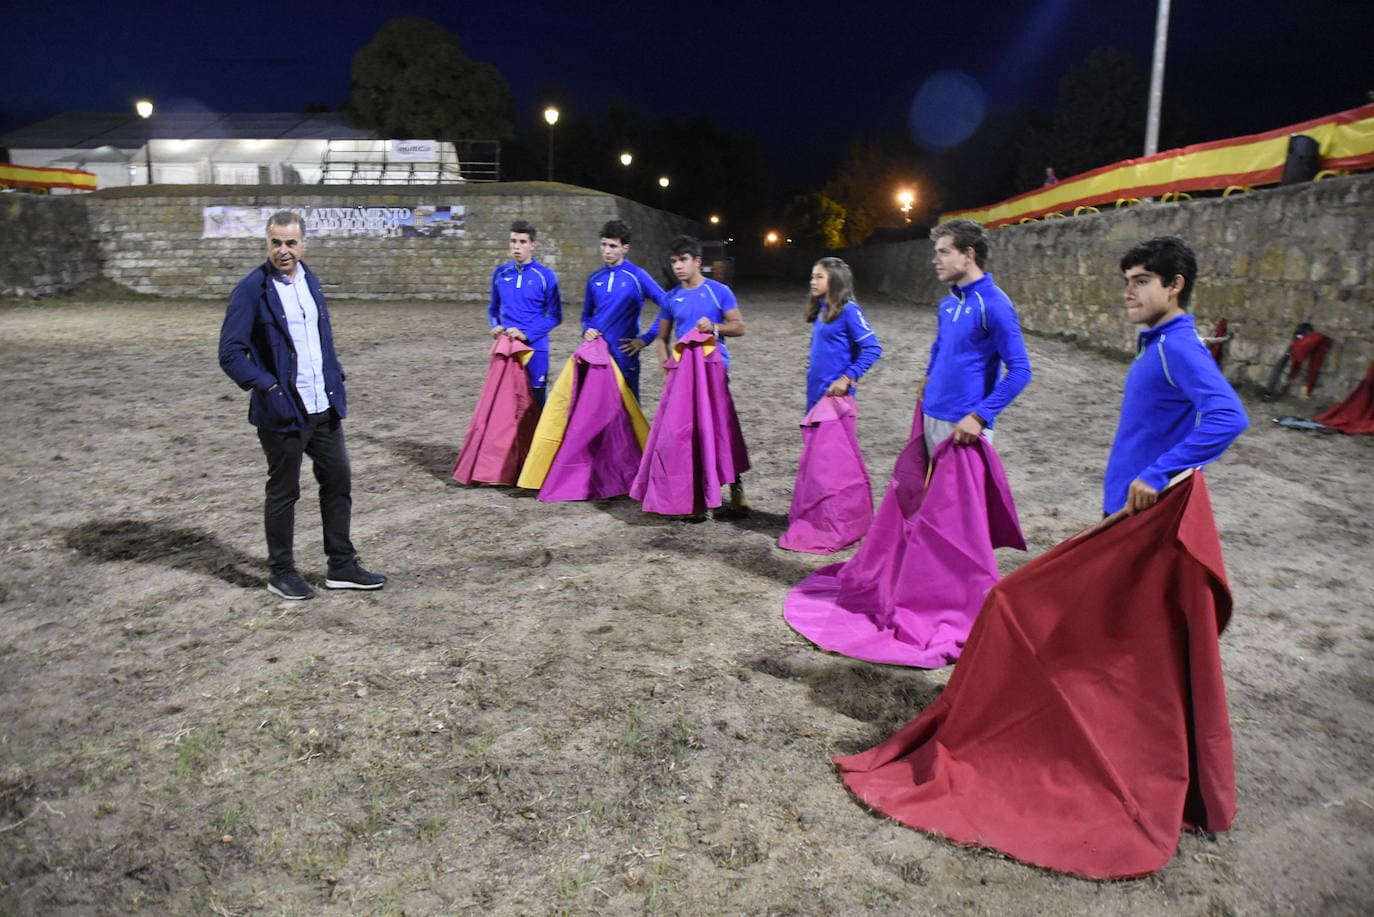 Arranca a XXIII Feria del Caballo de Ciudad Rodrigo con muestra taurina